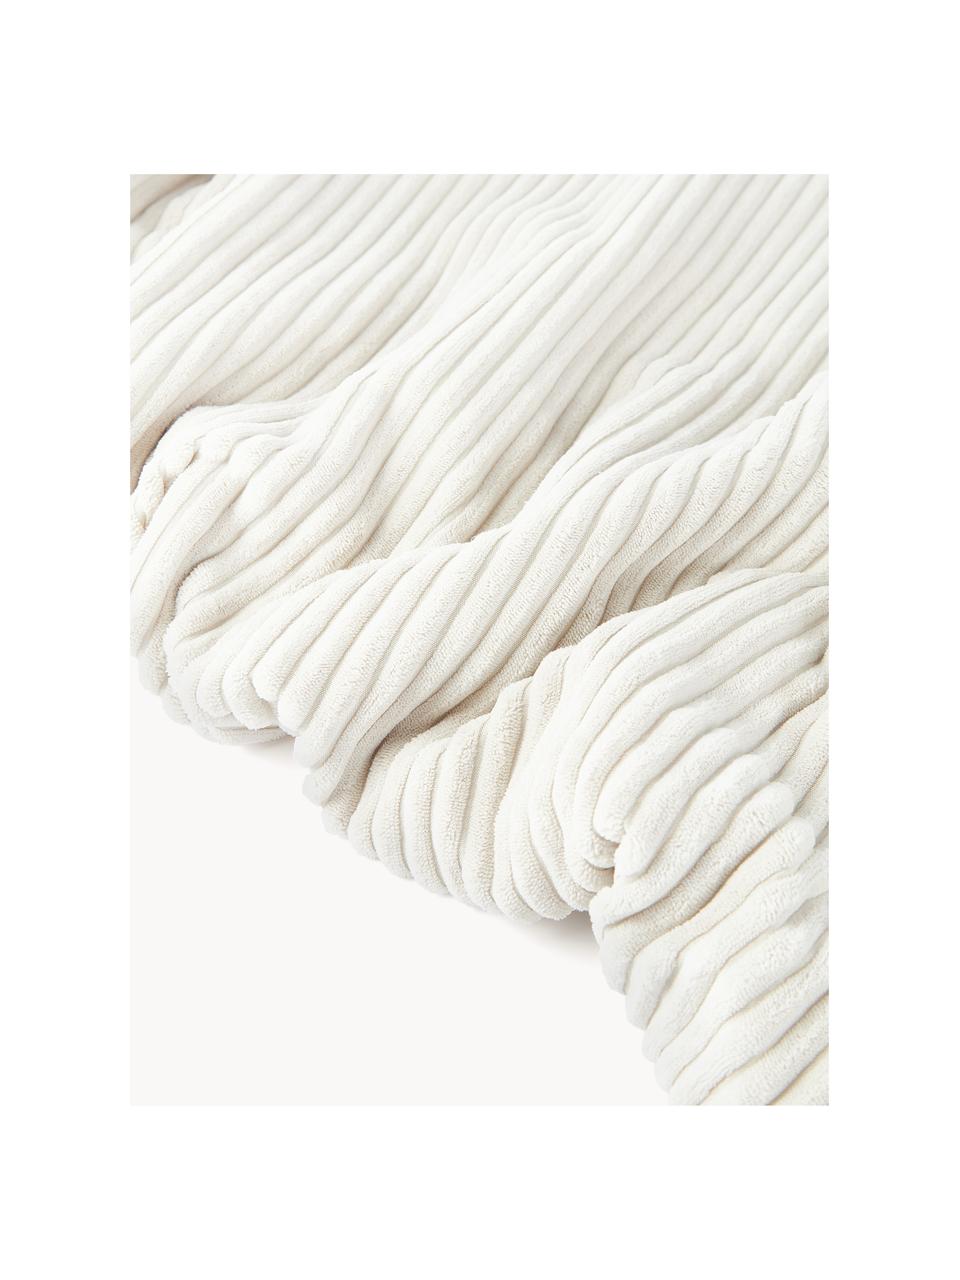 Plaid Kylen van corduroy, Gebroken wit, crèmewit, B 140 x L 190 cm